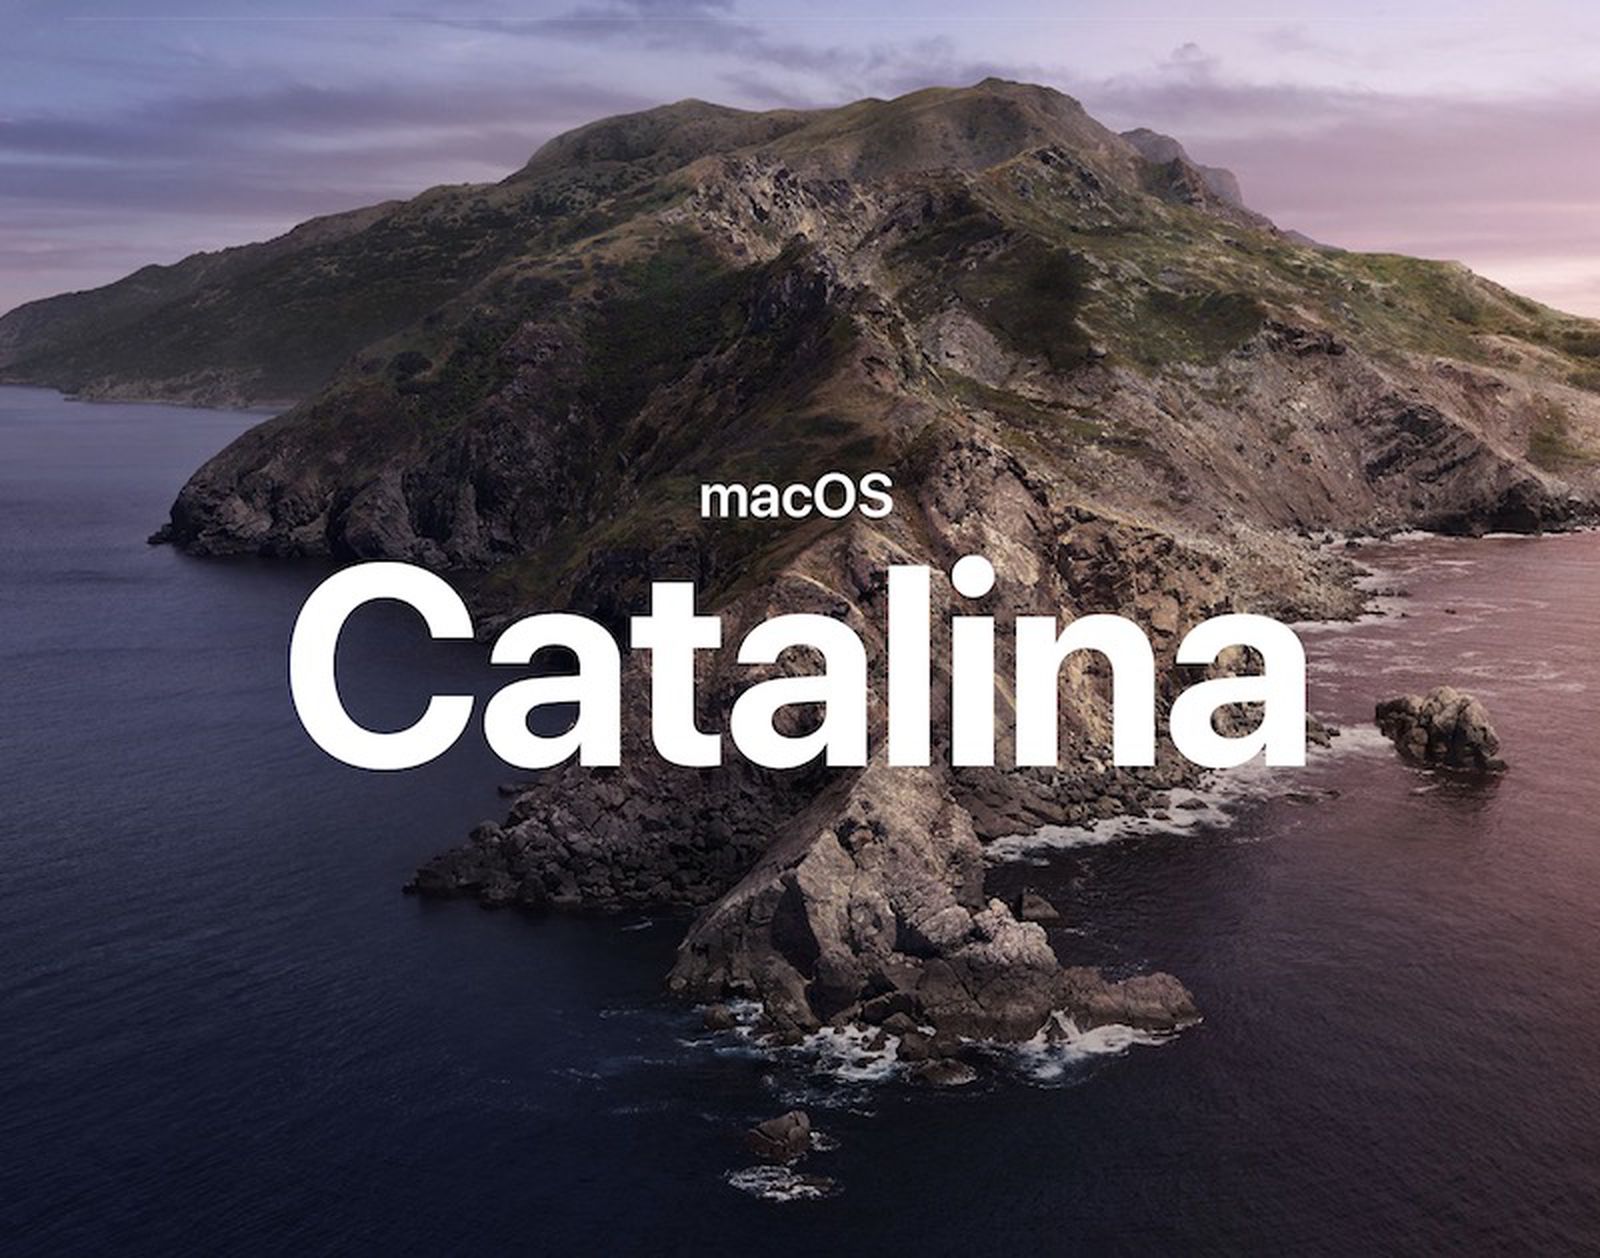 create bootable usb mac catalina from windows